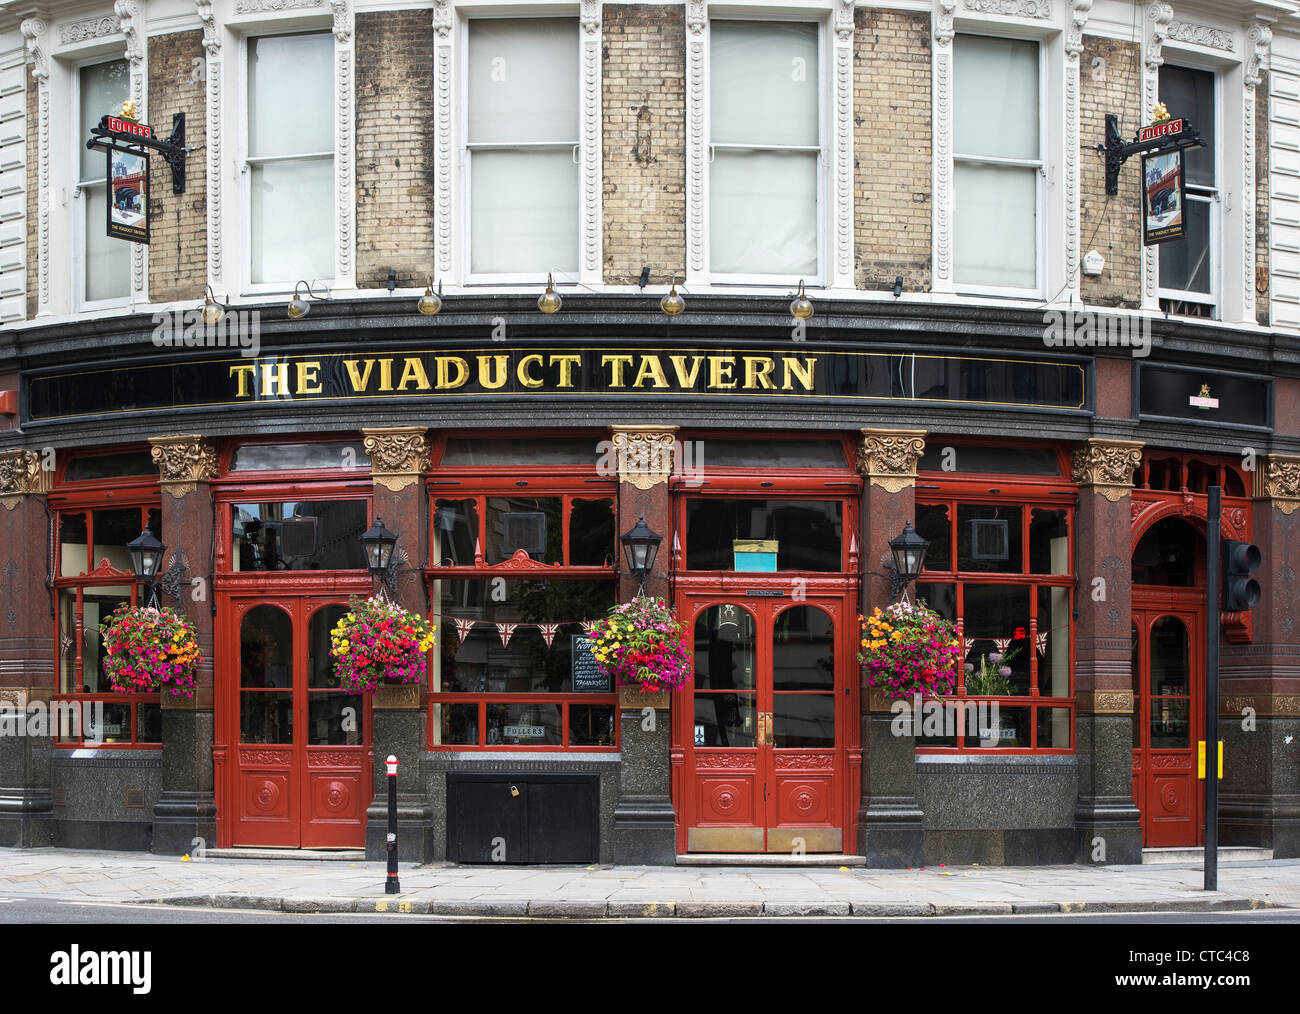 Le Viaduct Tavern. Newgate Street. Londres, Angleterre Banque D'Images